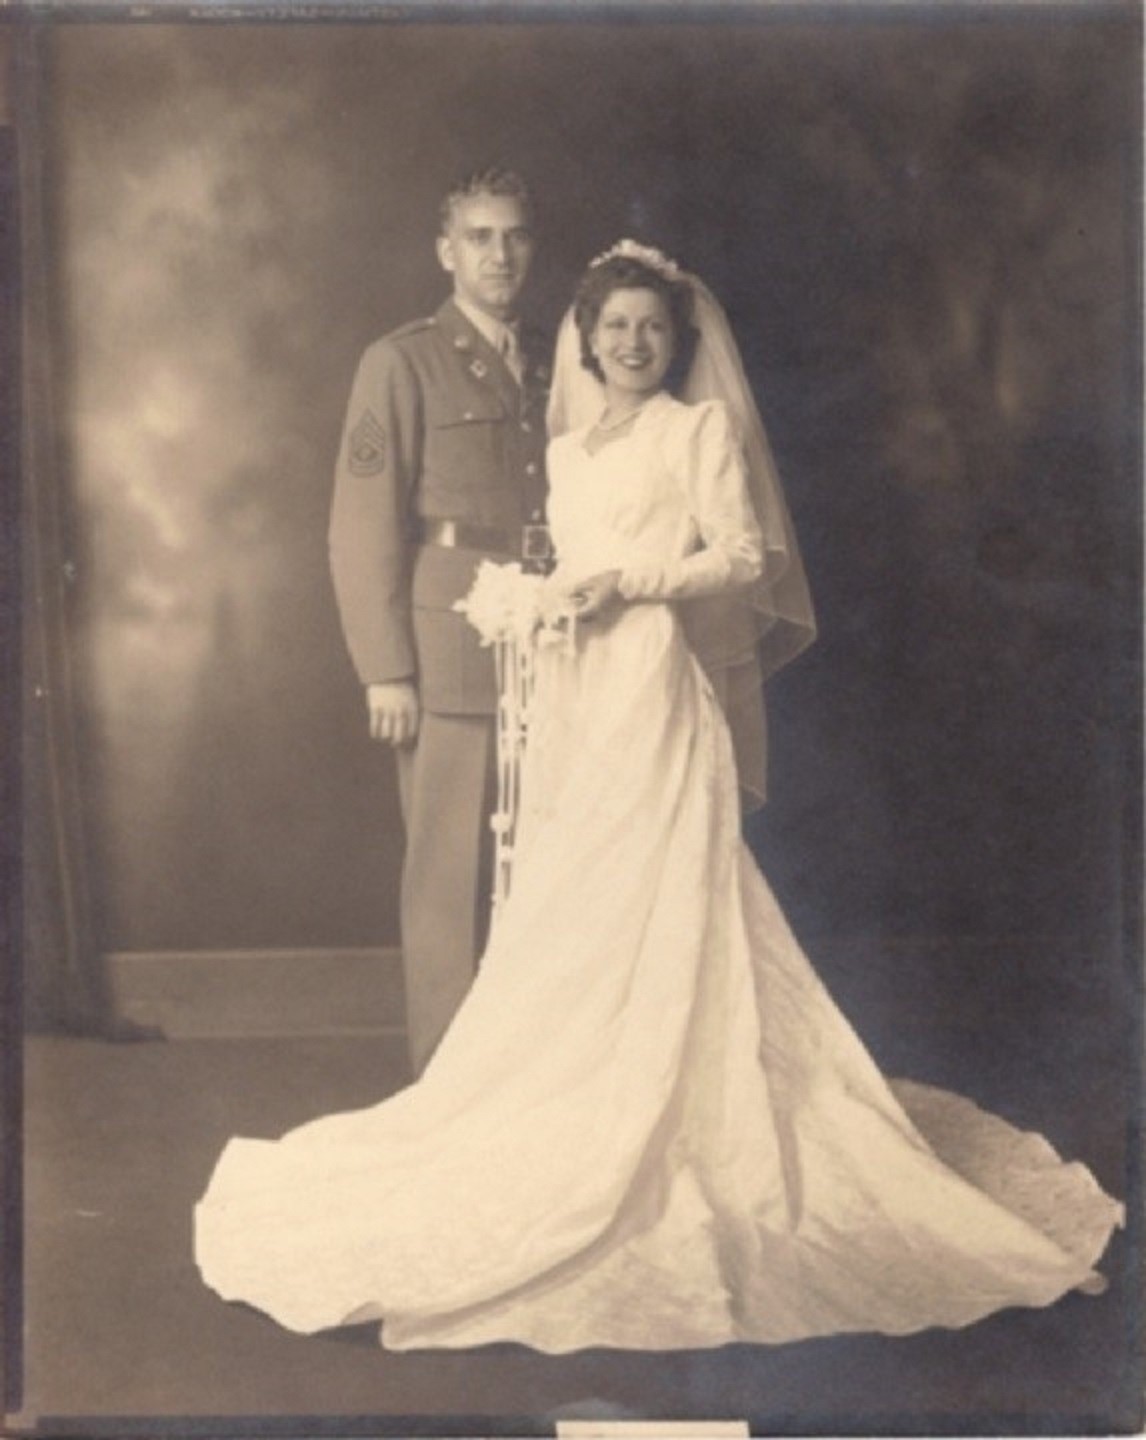 1_Sgt-1940-43-ASN-20237353-Lt.-Frank-Arnone-Wedding_pic_large-1910-1961